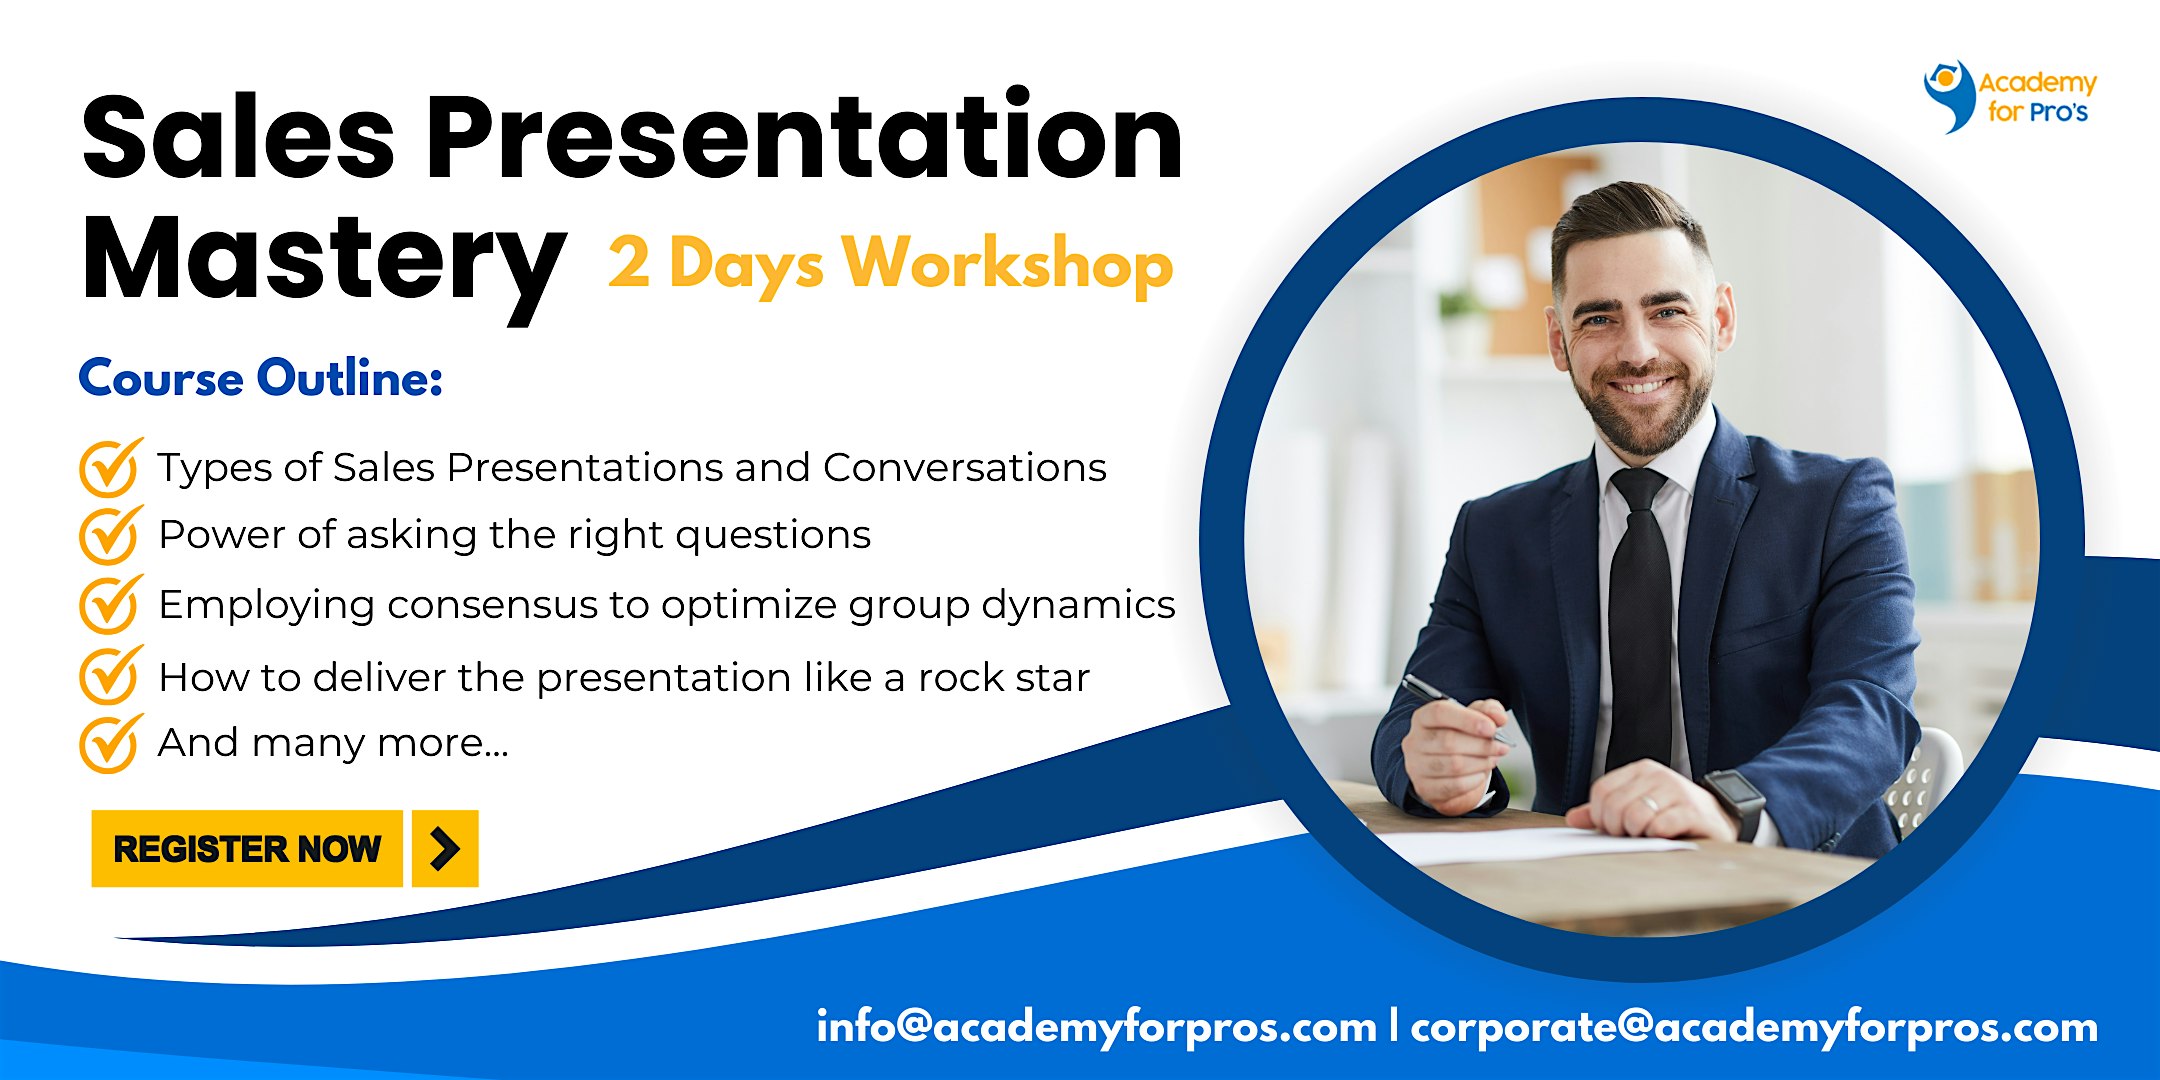 Sales Presentation Mastery 2 Days Workshop in Carlsbad, CA